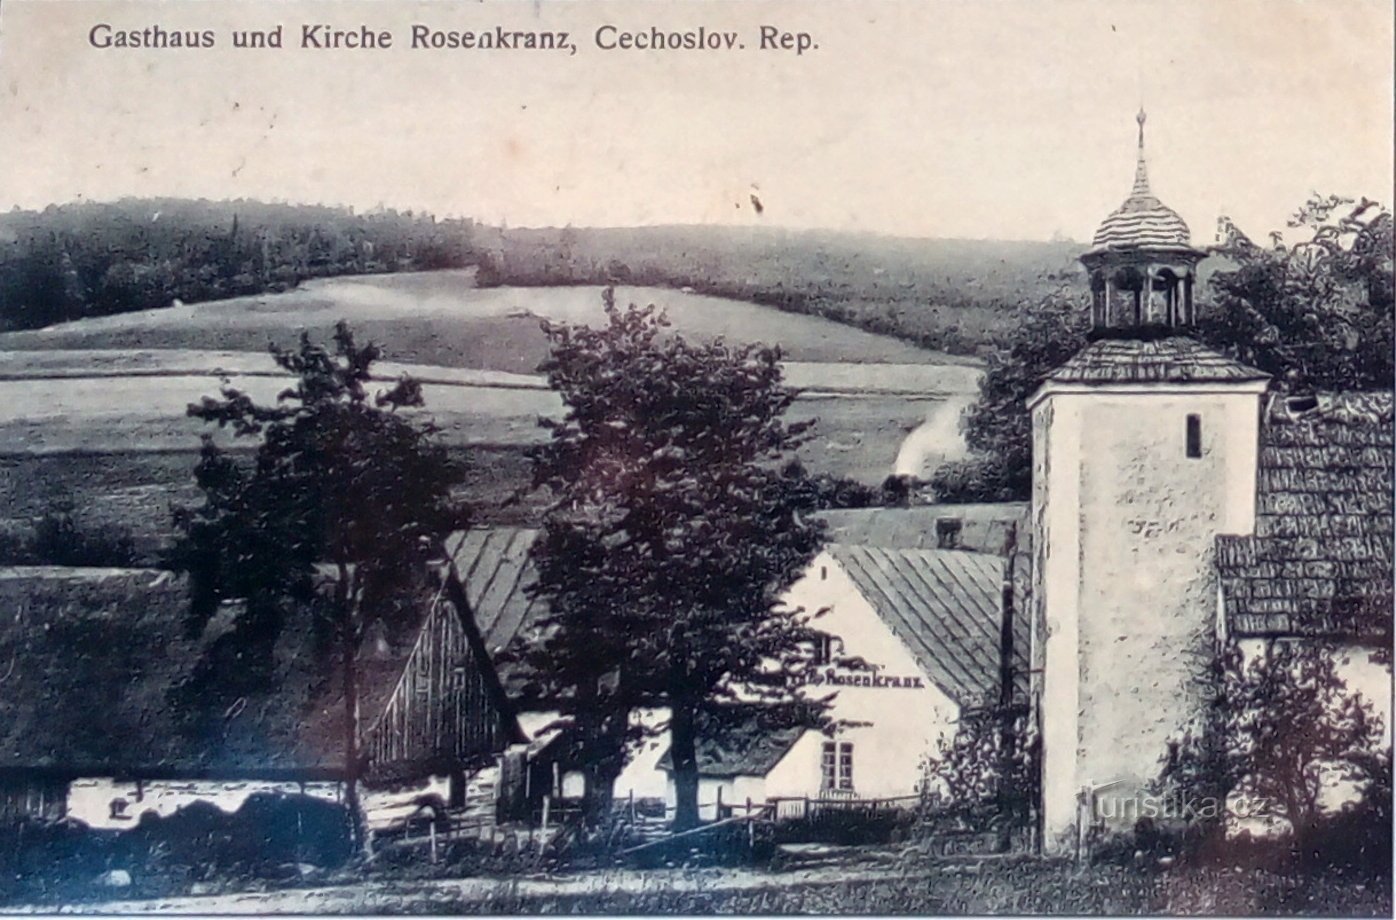 Rychlebské hory: Růženín, fotografía de época tomada de una pizarra